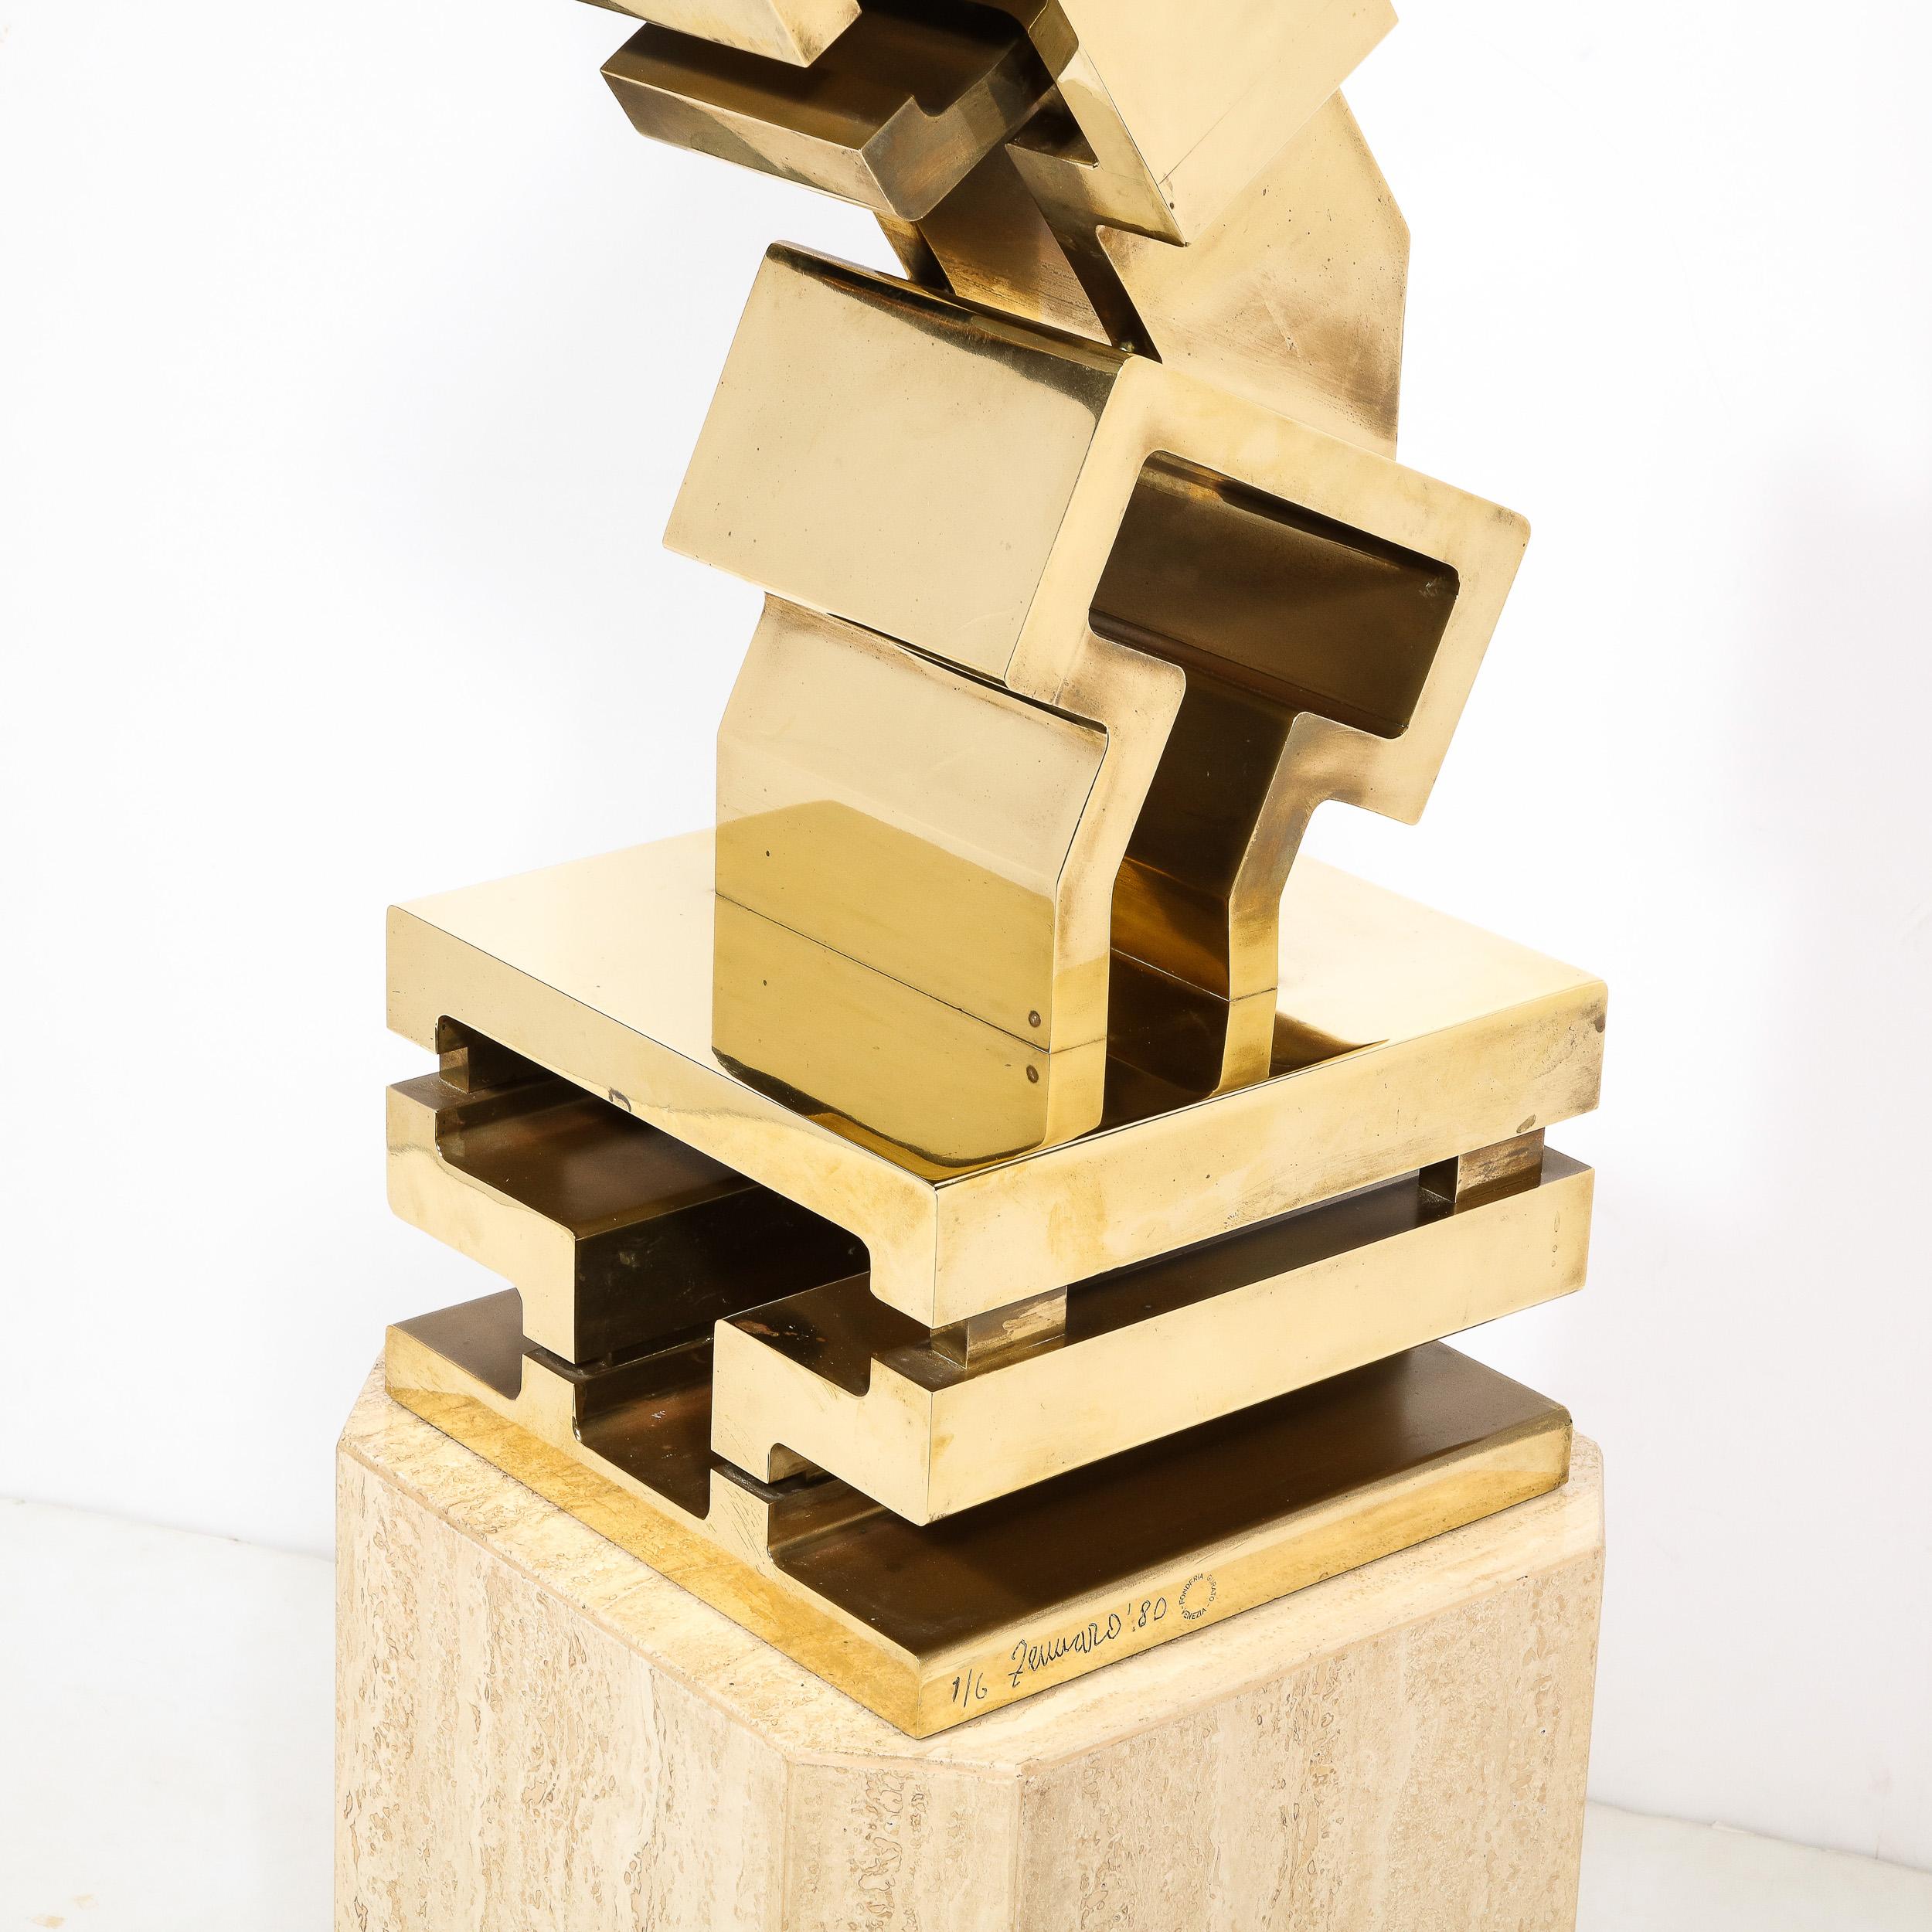 Modernist Sculpture In Polished Brass on Travertine Base by Giorgio Zennaro  1